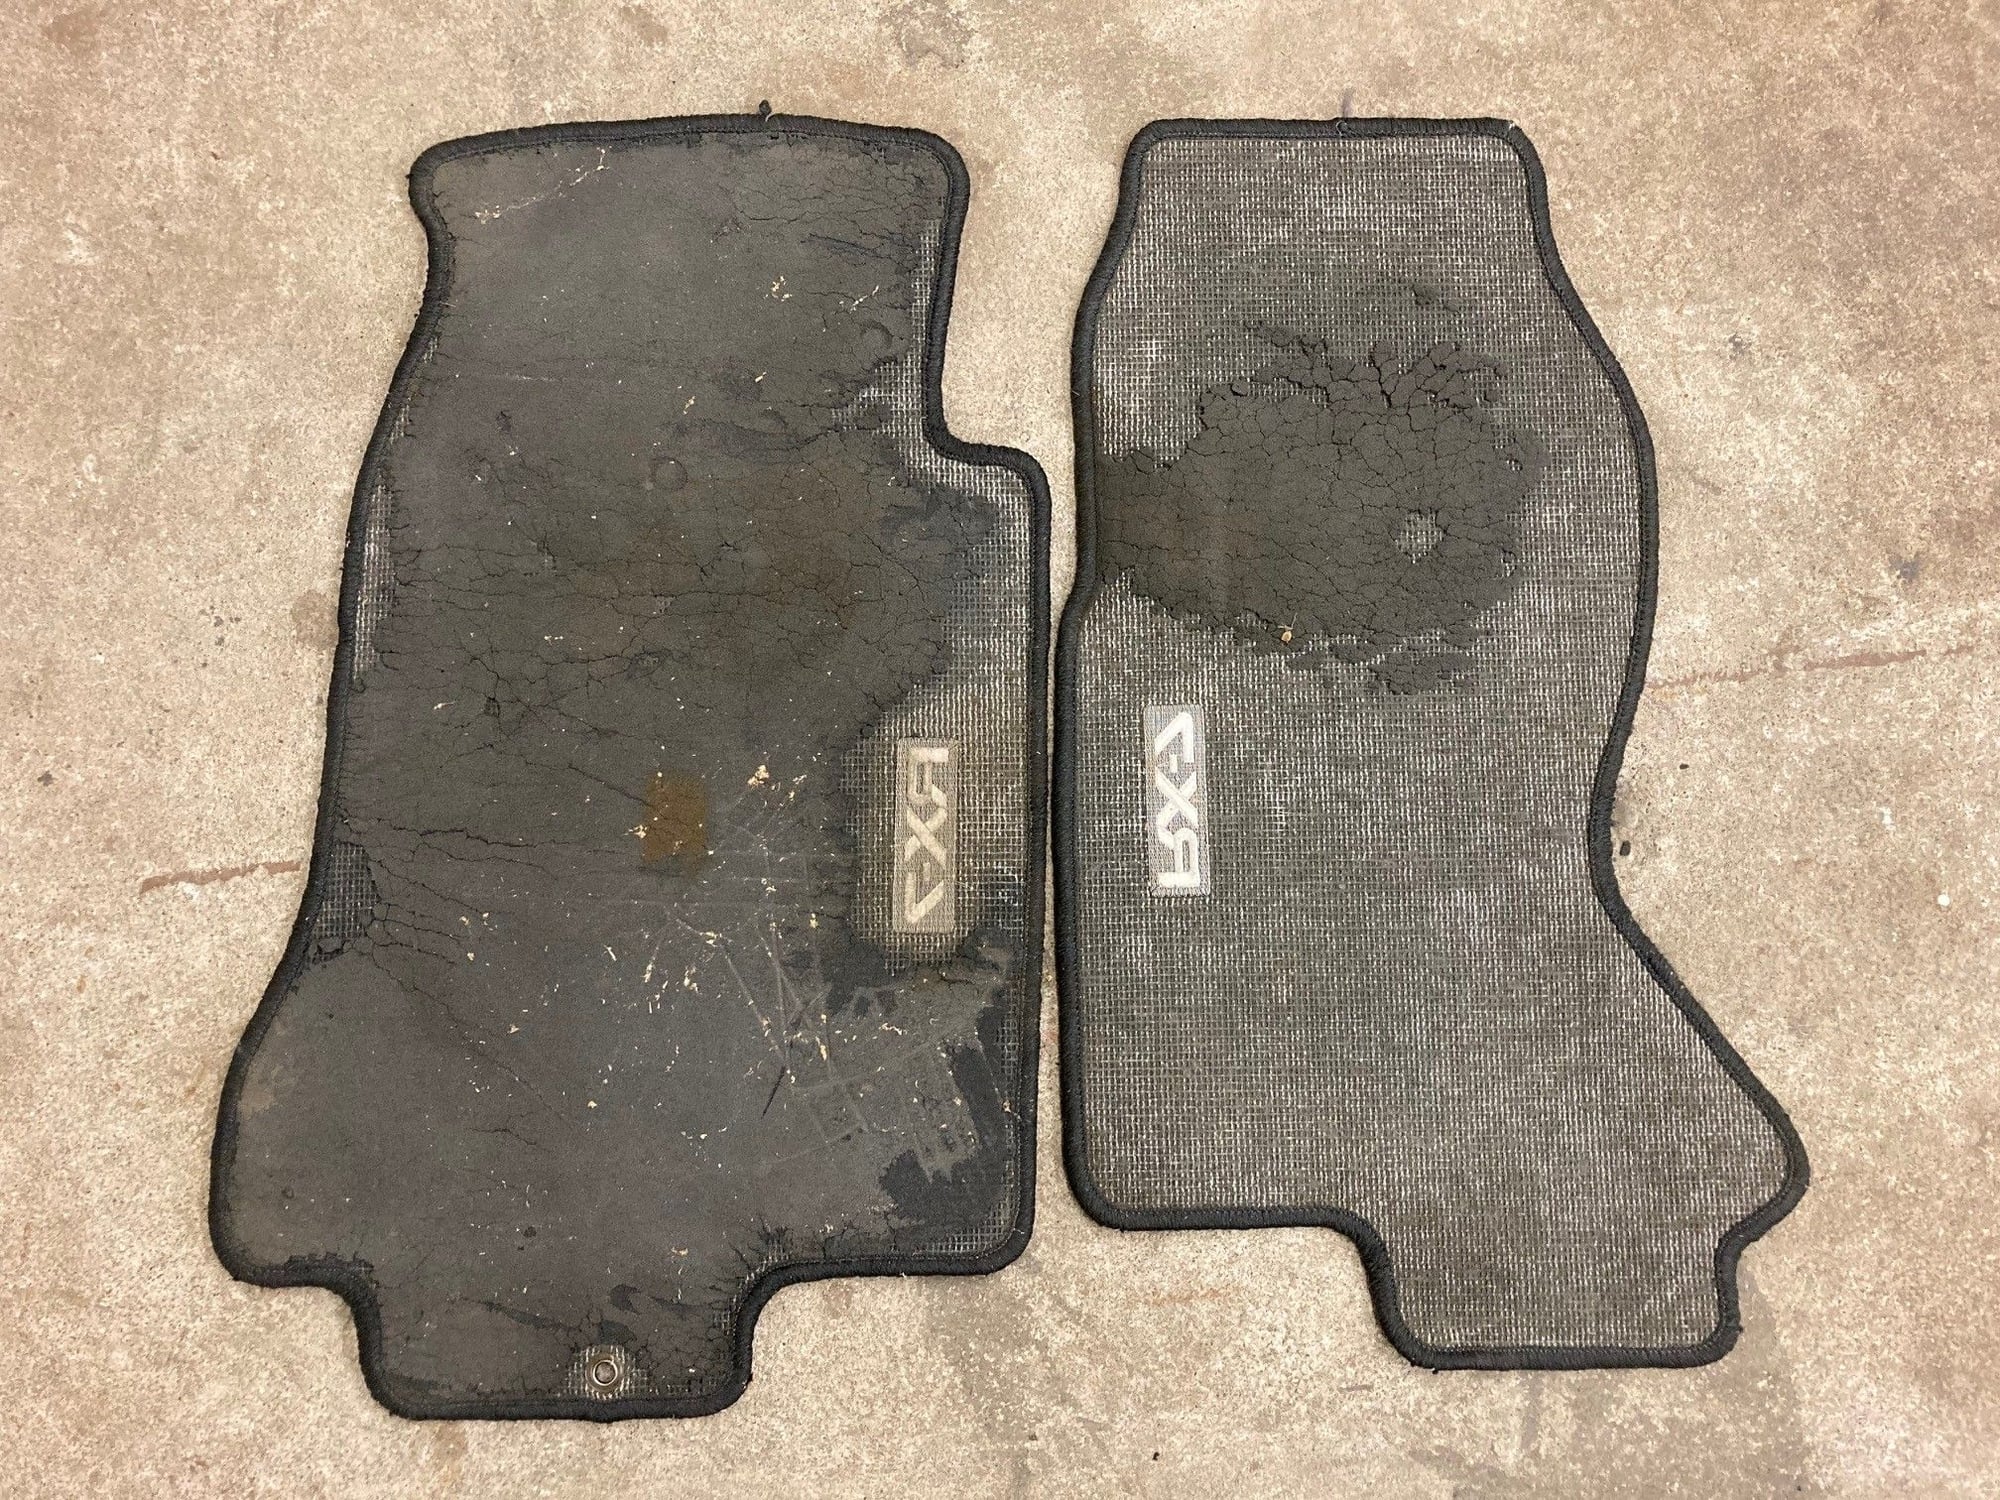 Interior/Upholstery - Black OEM floormats - Used - 1993 to 1995 Mazda RX-7 - Eugene, OR 97404, United States